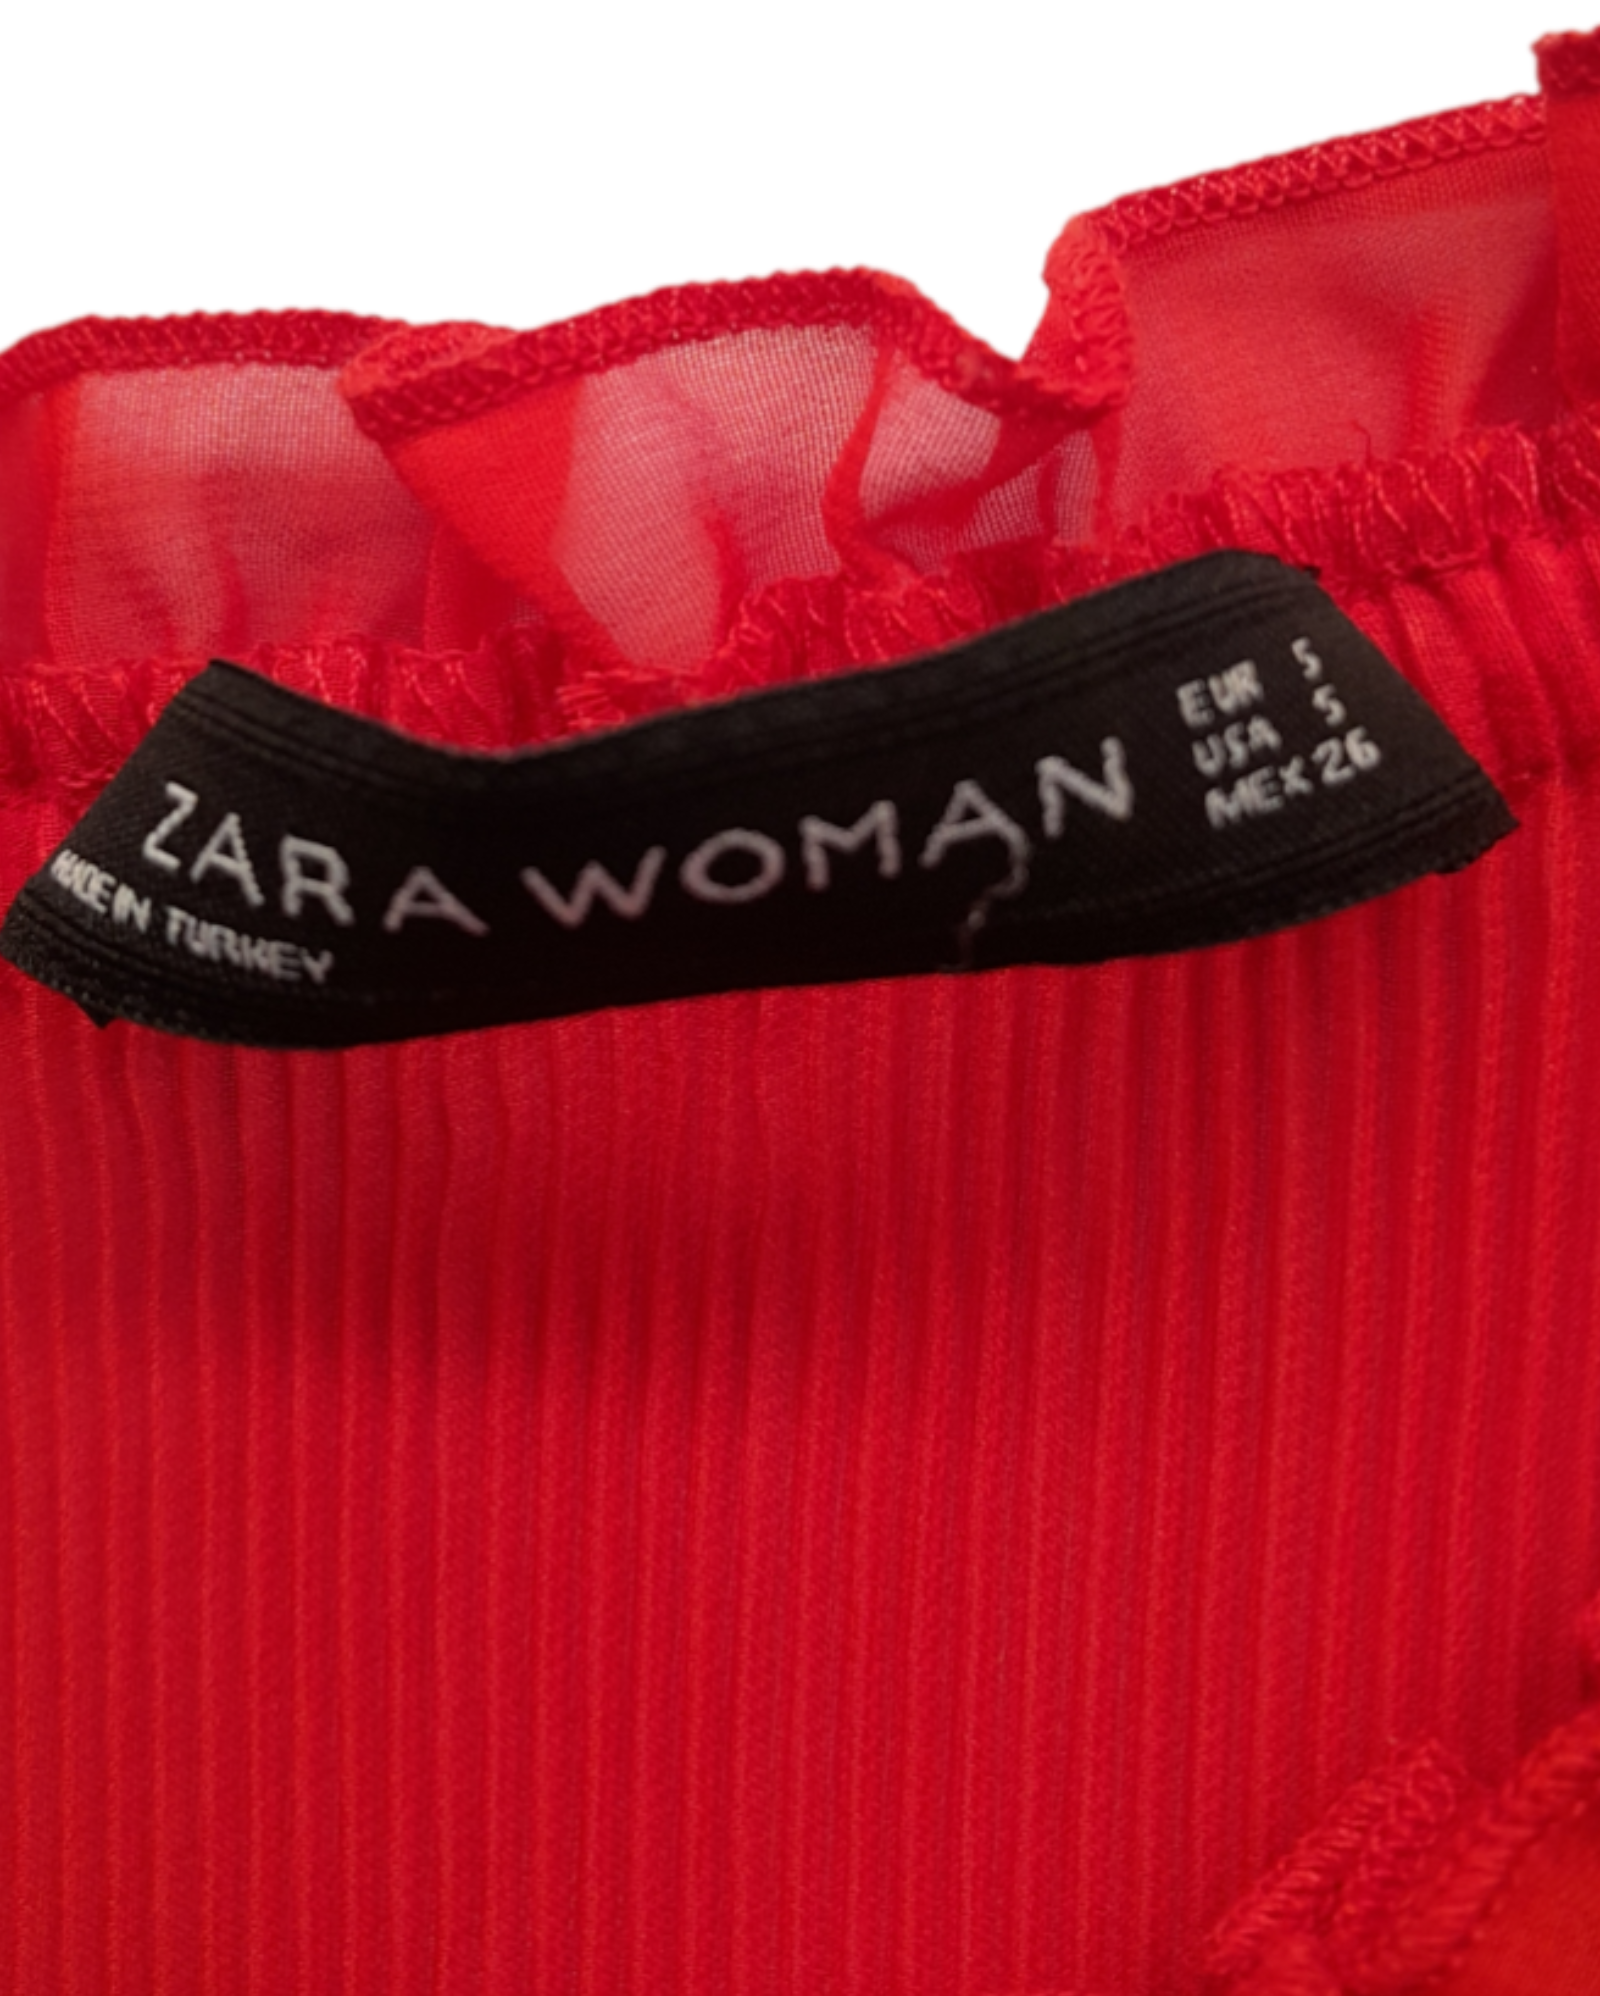 Blusas Casuales Zara